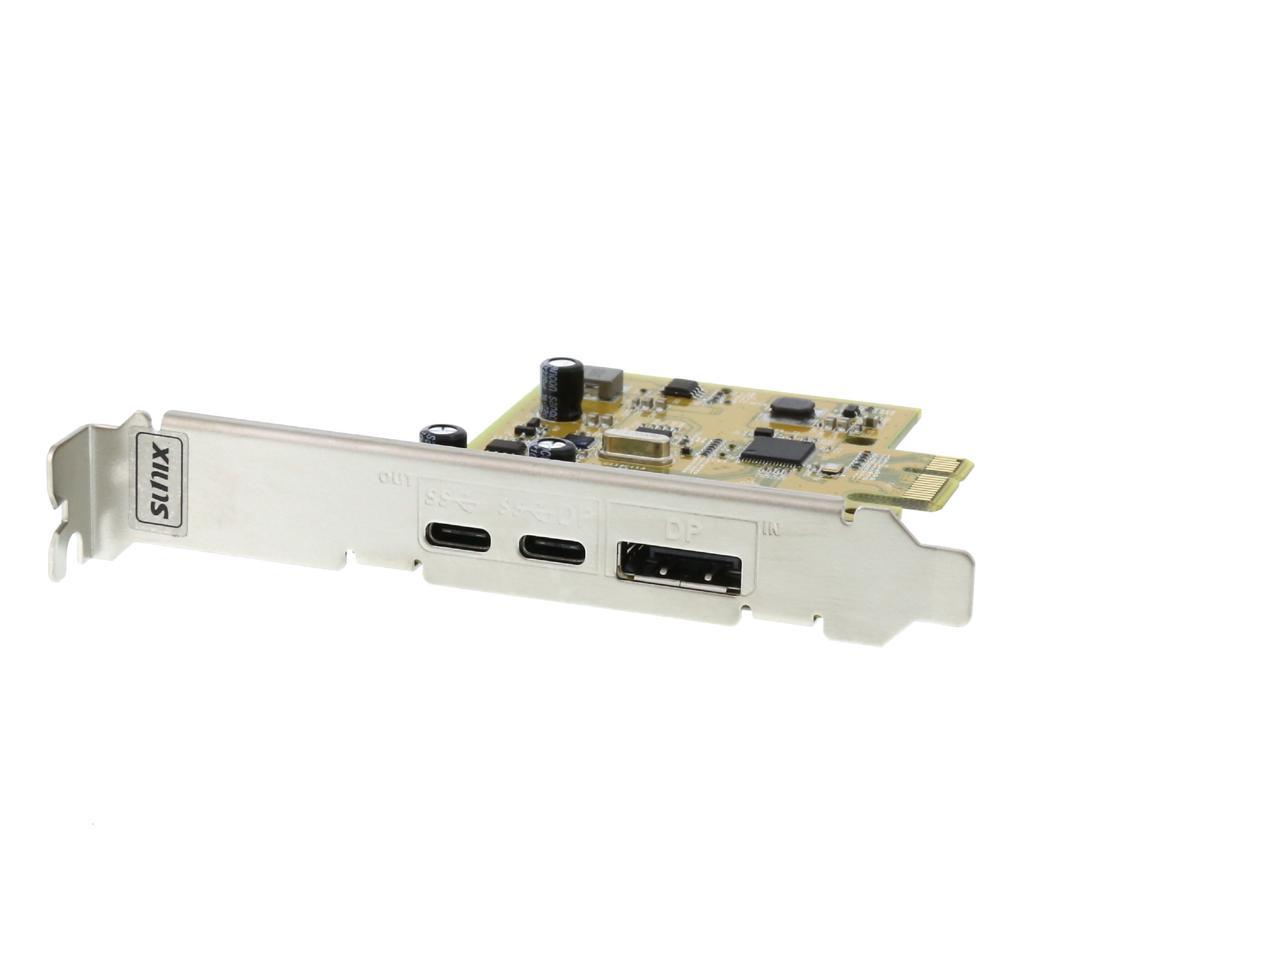 SUNIX USB 3.1 10G & DisplayPort Alt-Mode PCI Express Host Card 